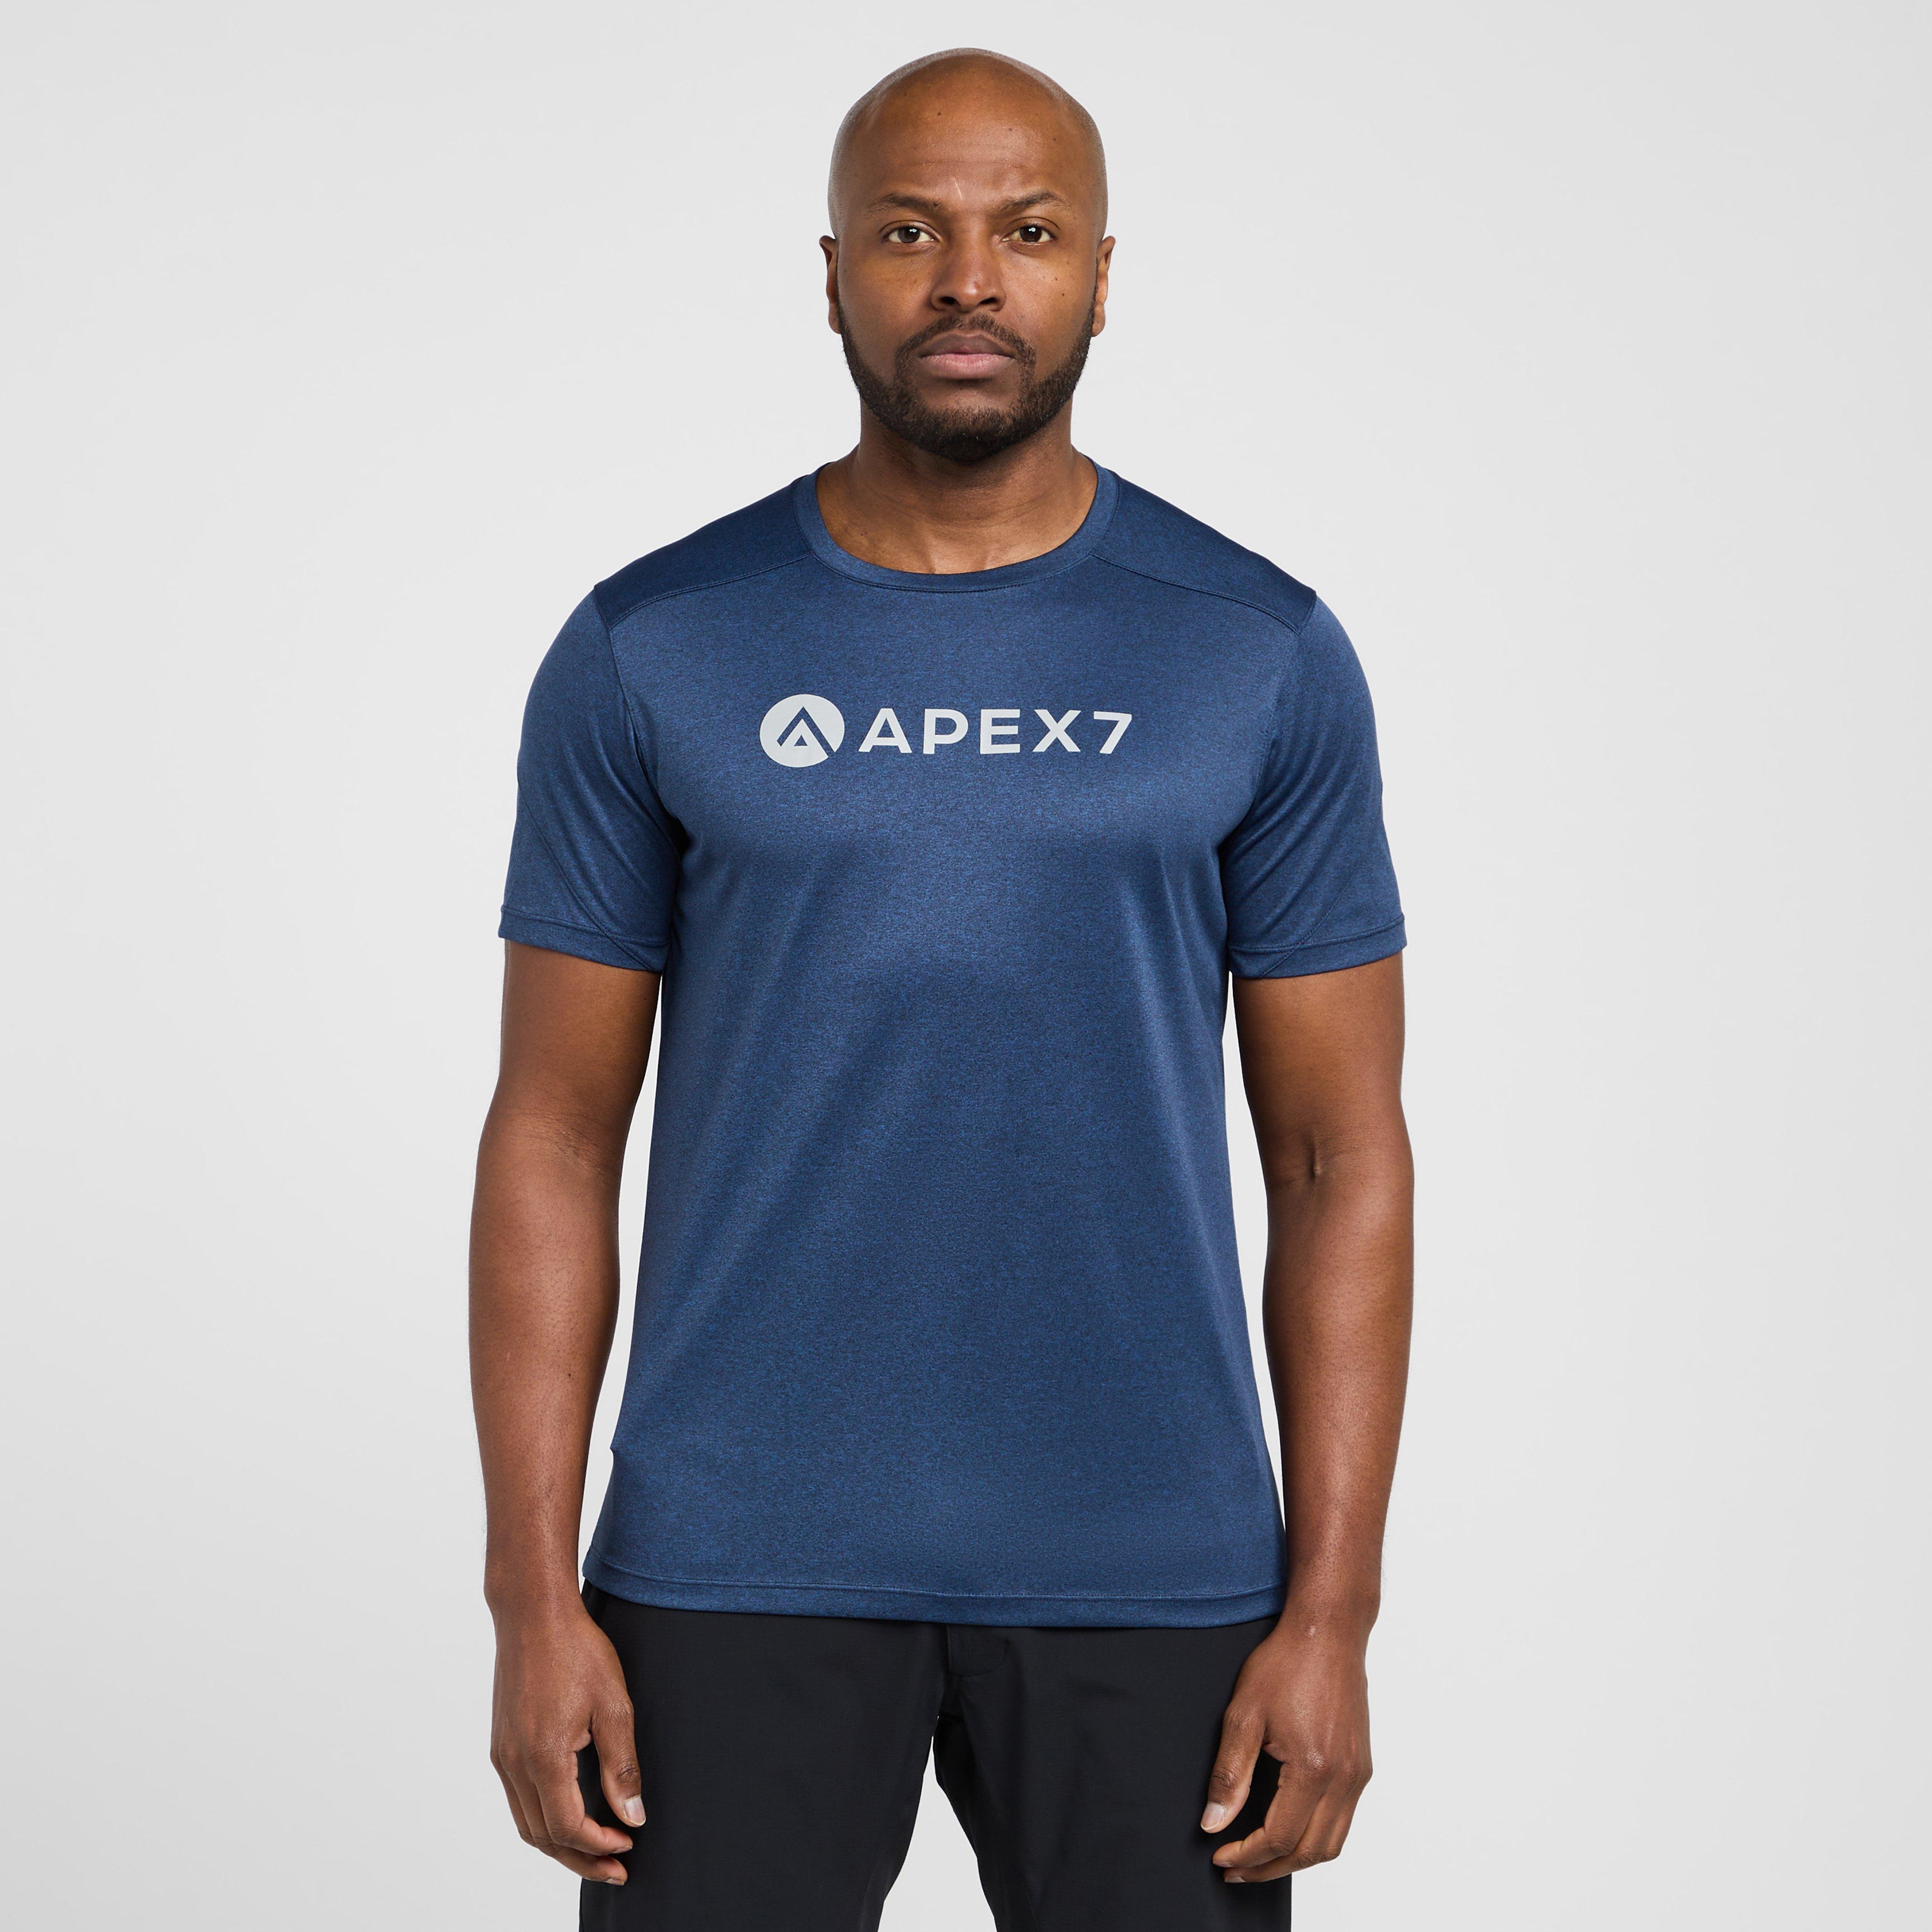 Blacks Apex7 Xenon Short Sleeve Tech T-Shirt, Navy